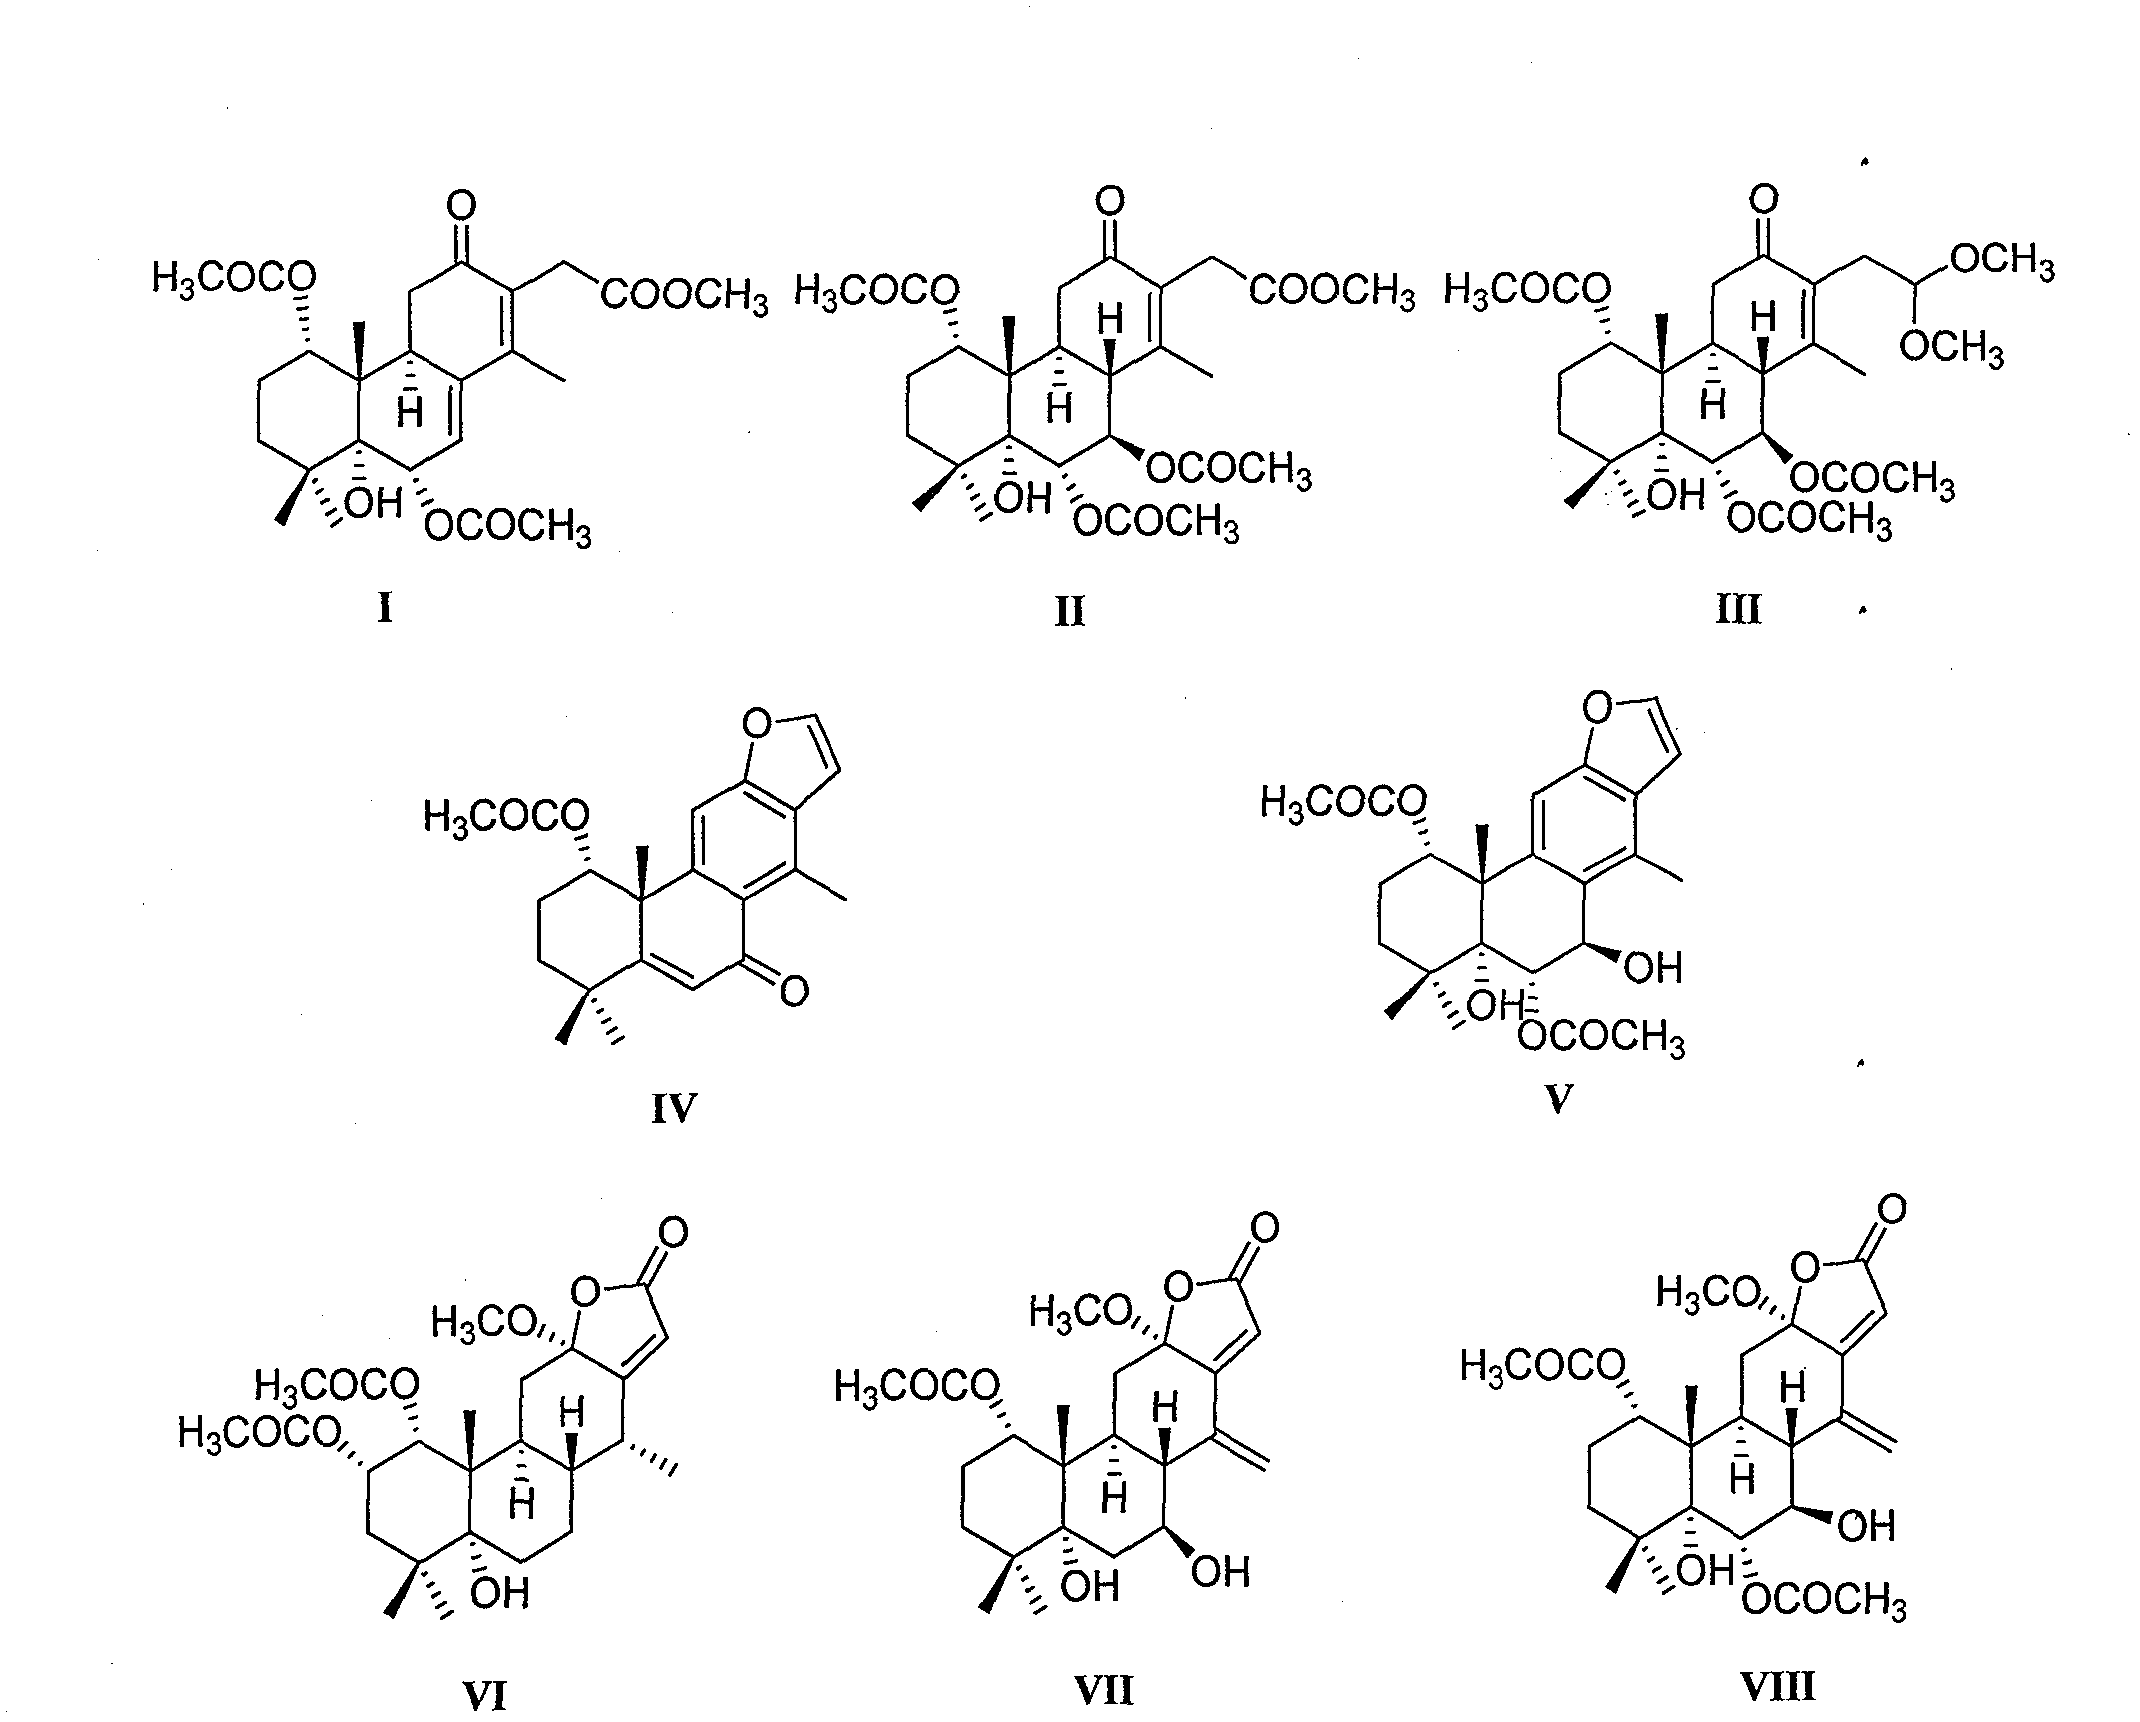 Eight cassane diterpenoid compounds having substantial antitumor activity